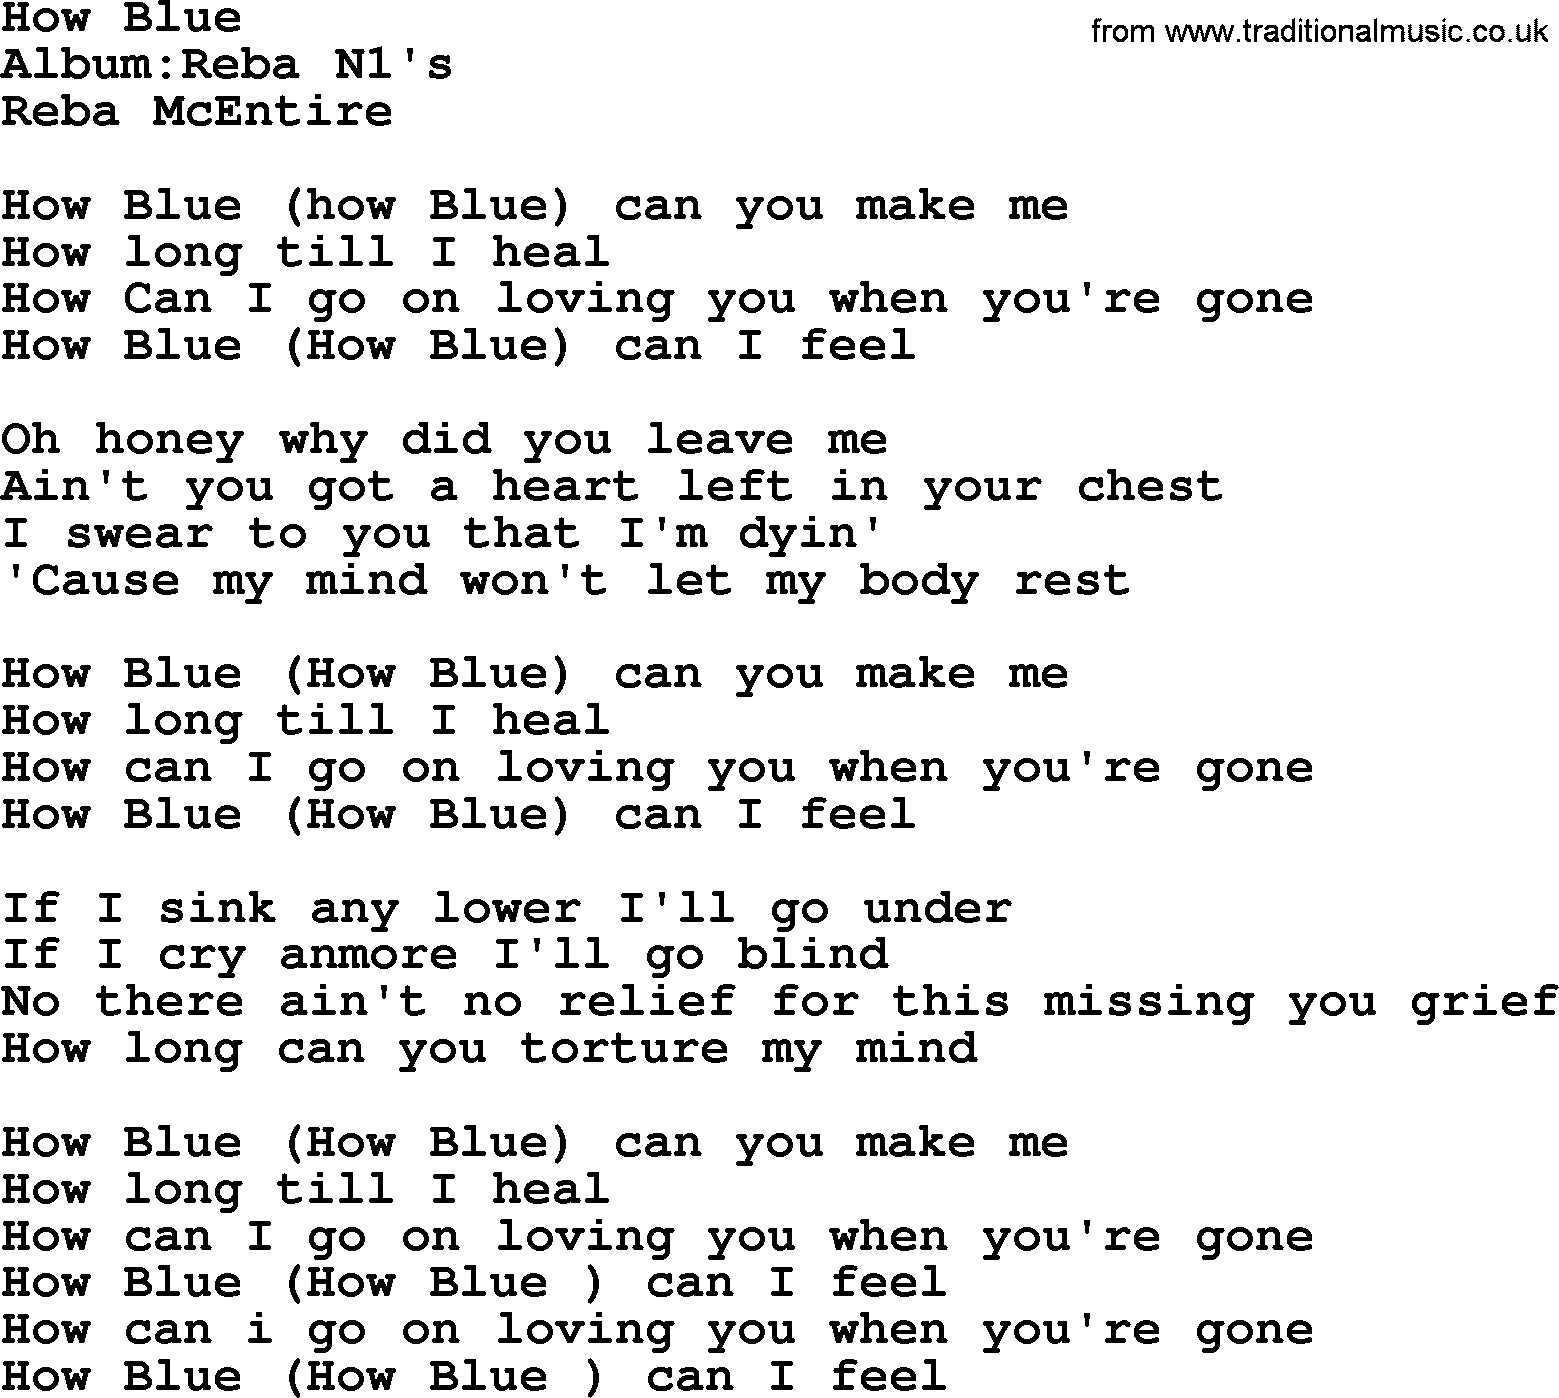 Reba McEntire song: How Blue lyrics